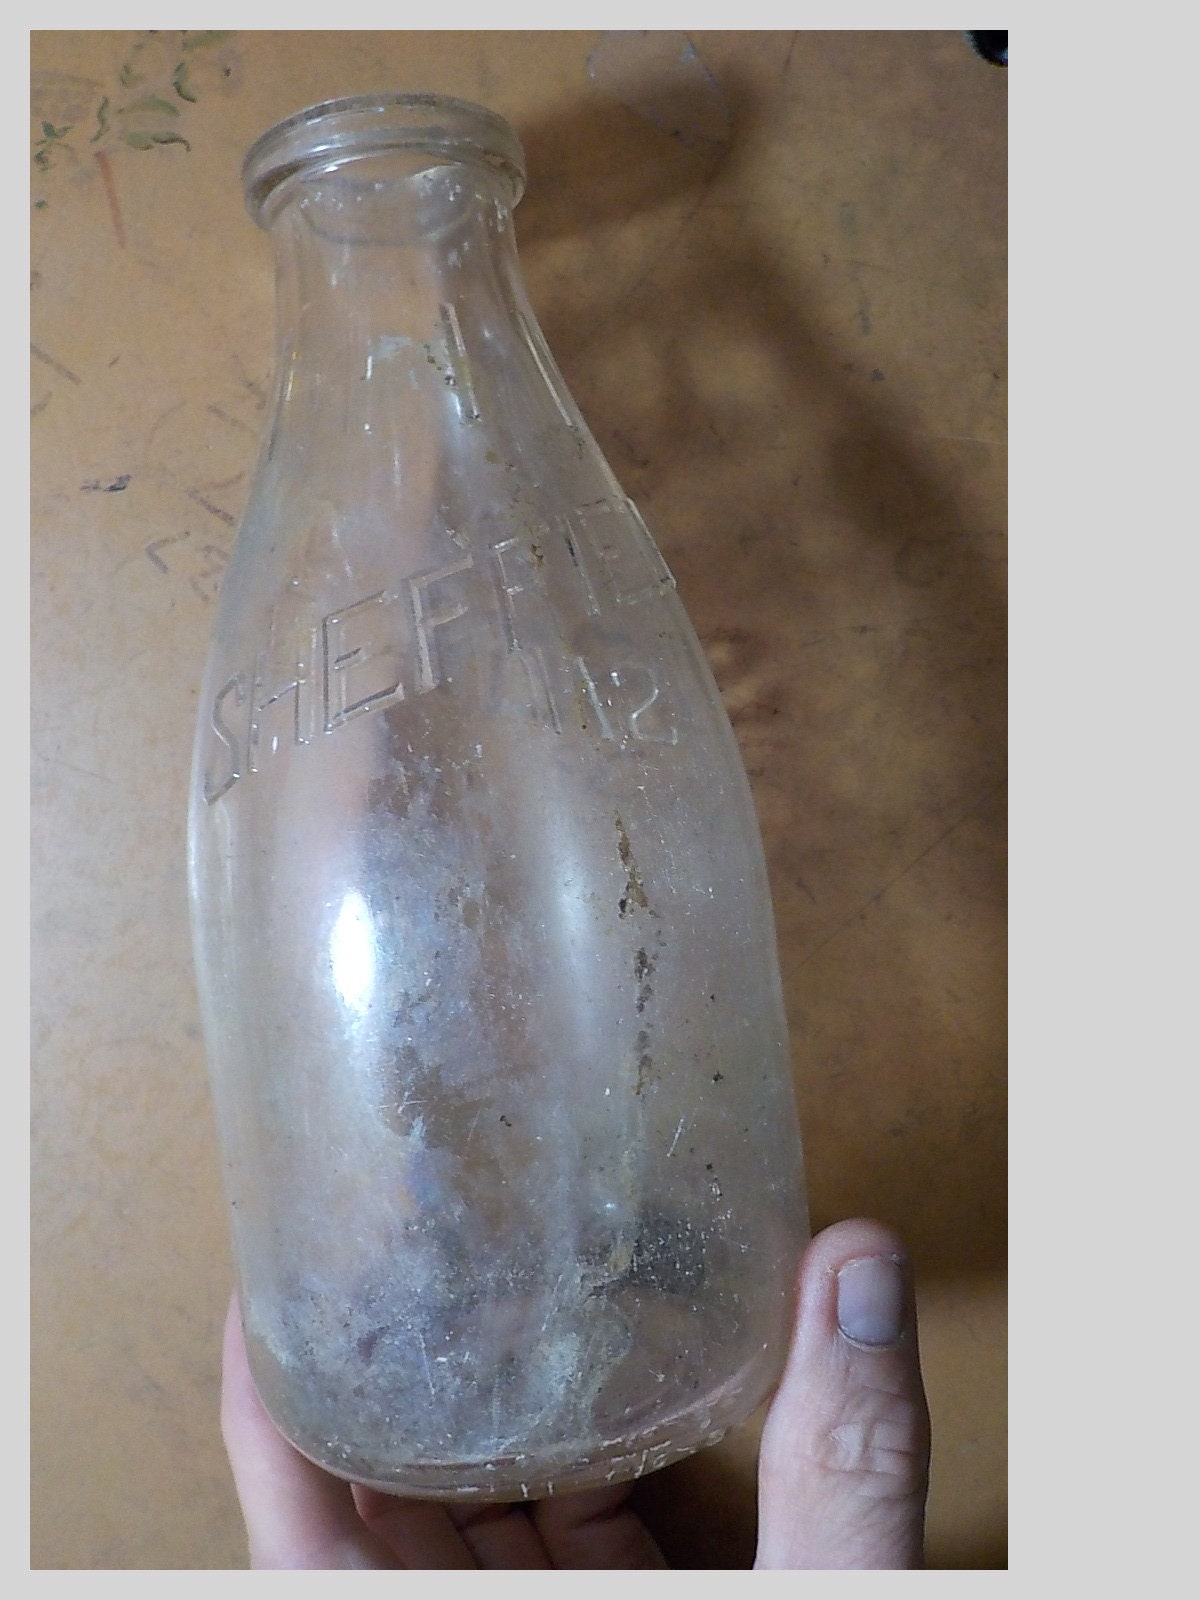 Milkman Glass Milk Bottle 1-Qt. with Plastic Lid - Personalization  Available